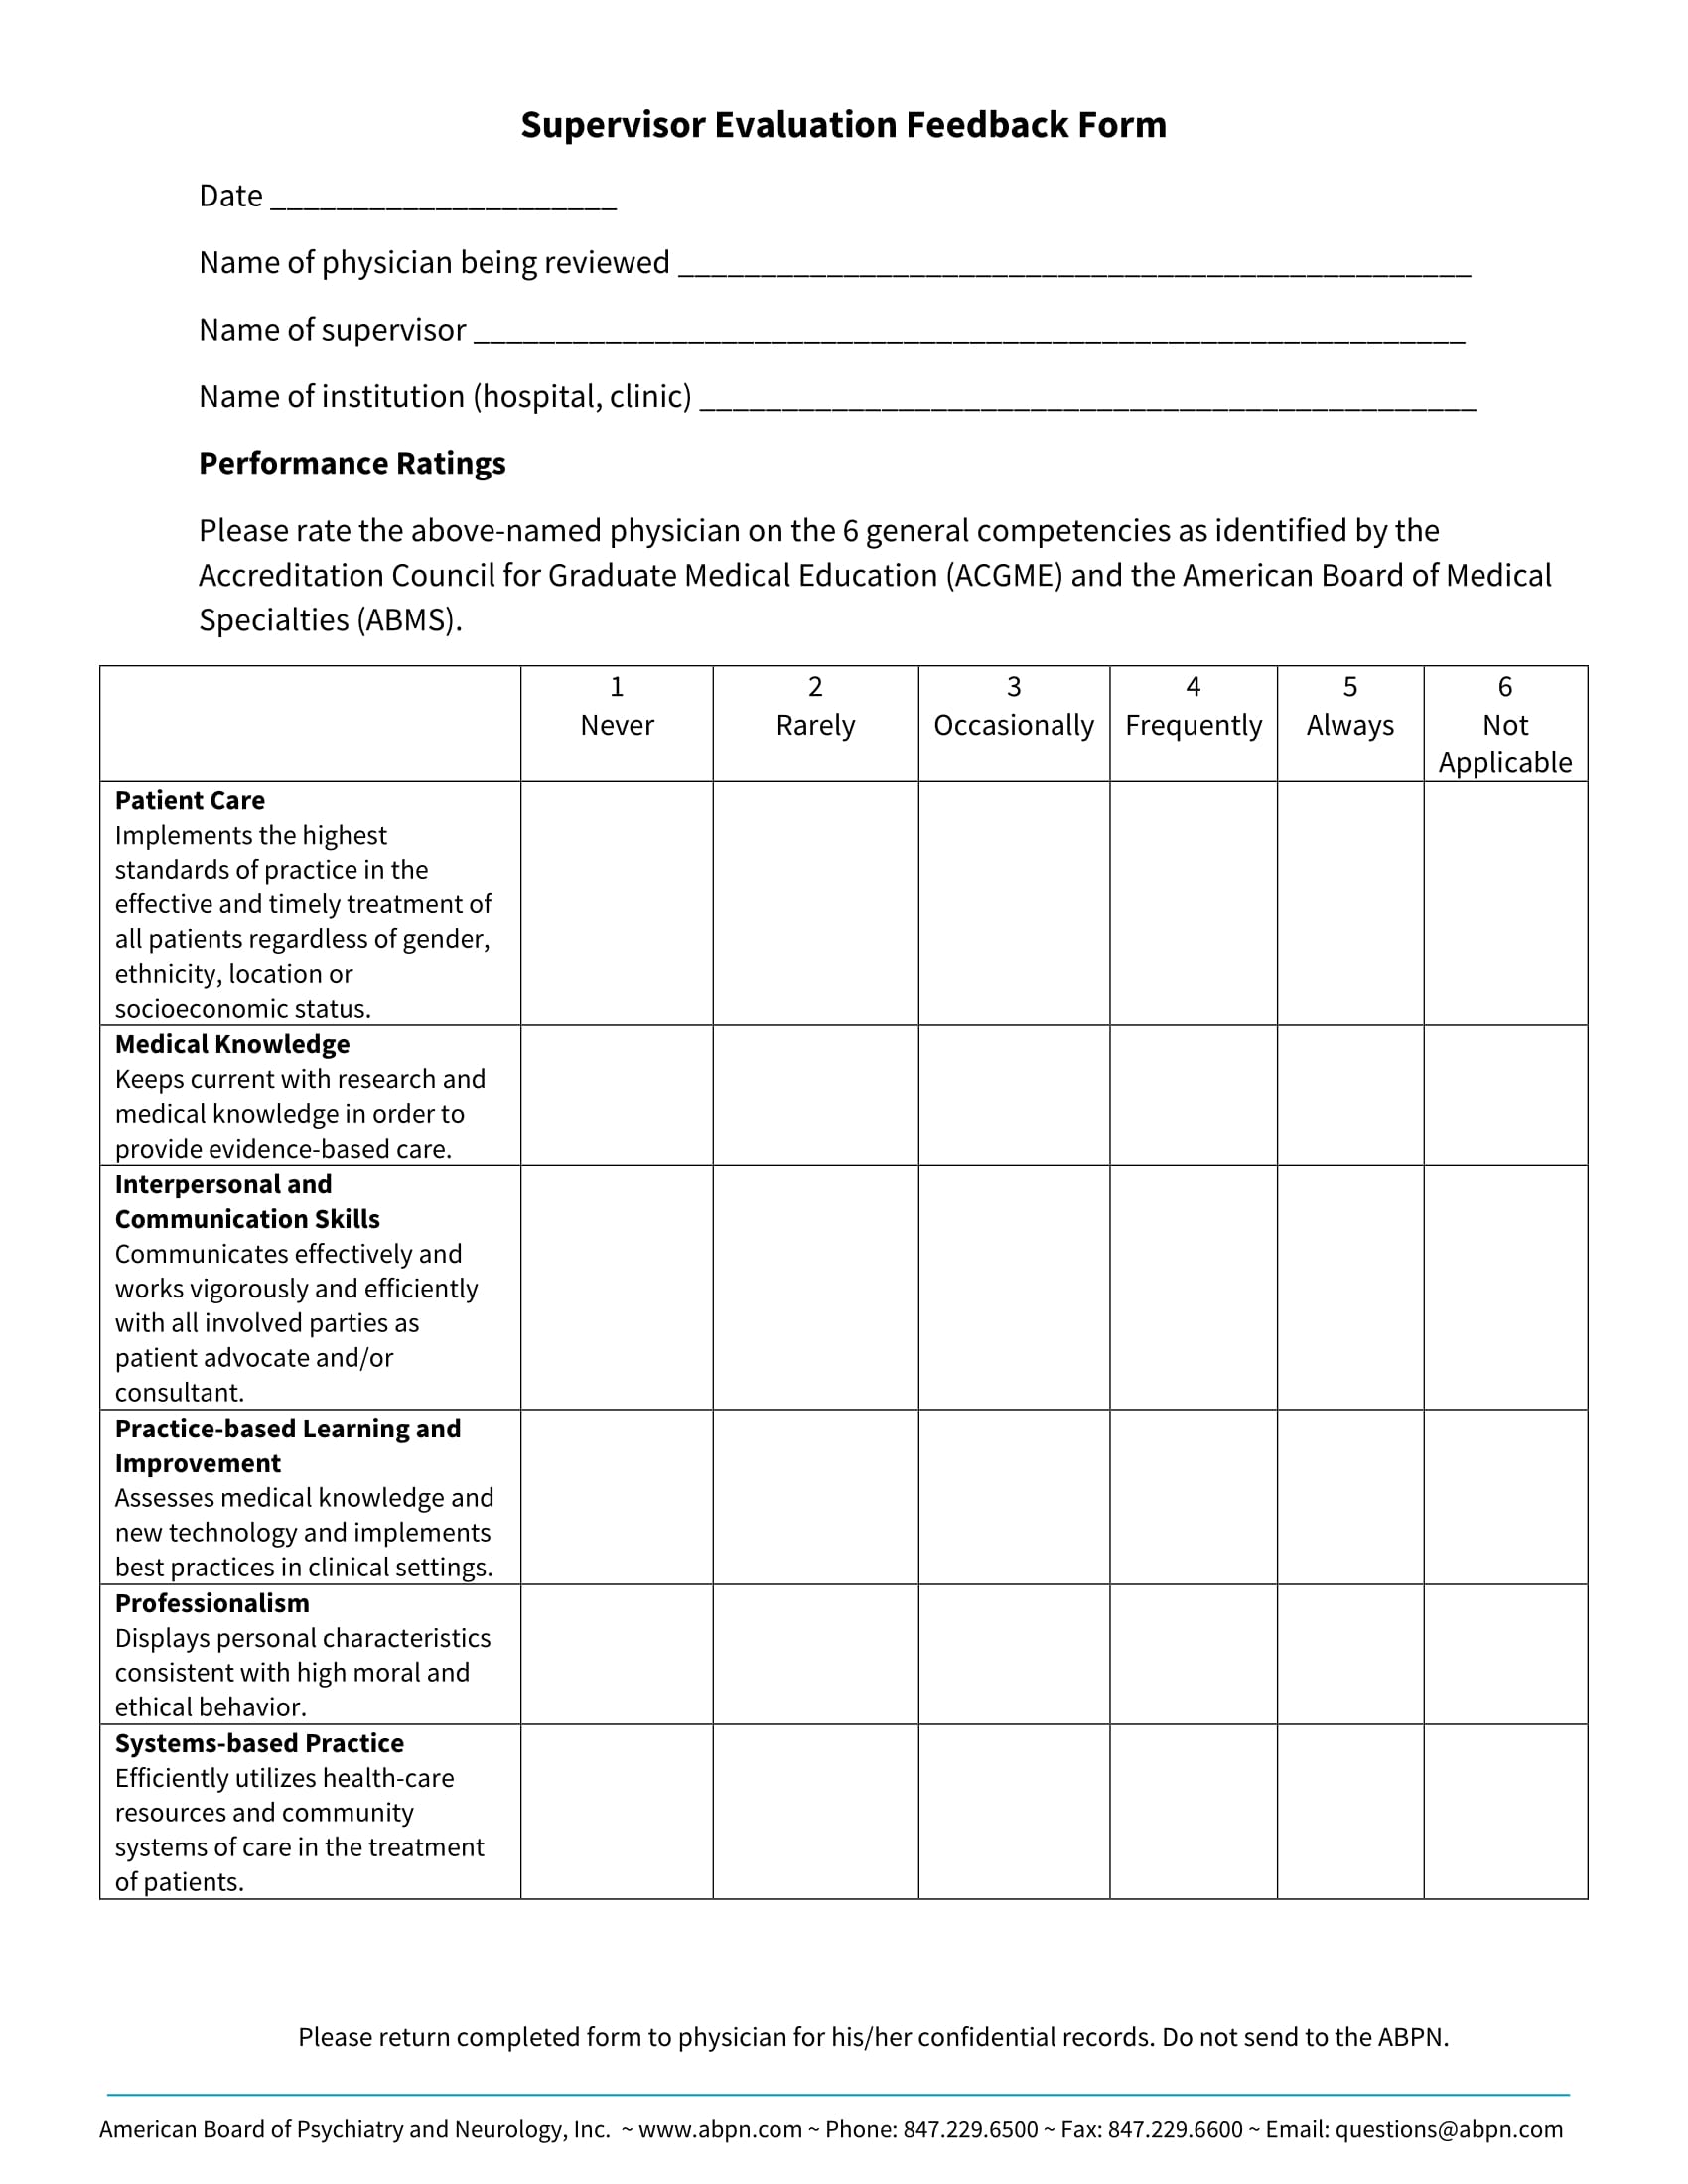 supervisor evaluation feedback form 2